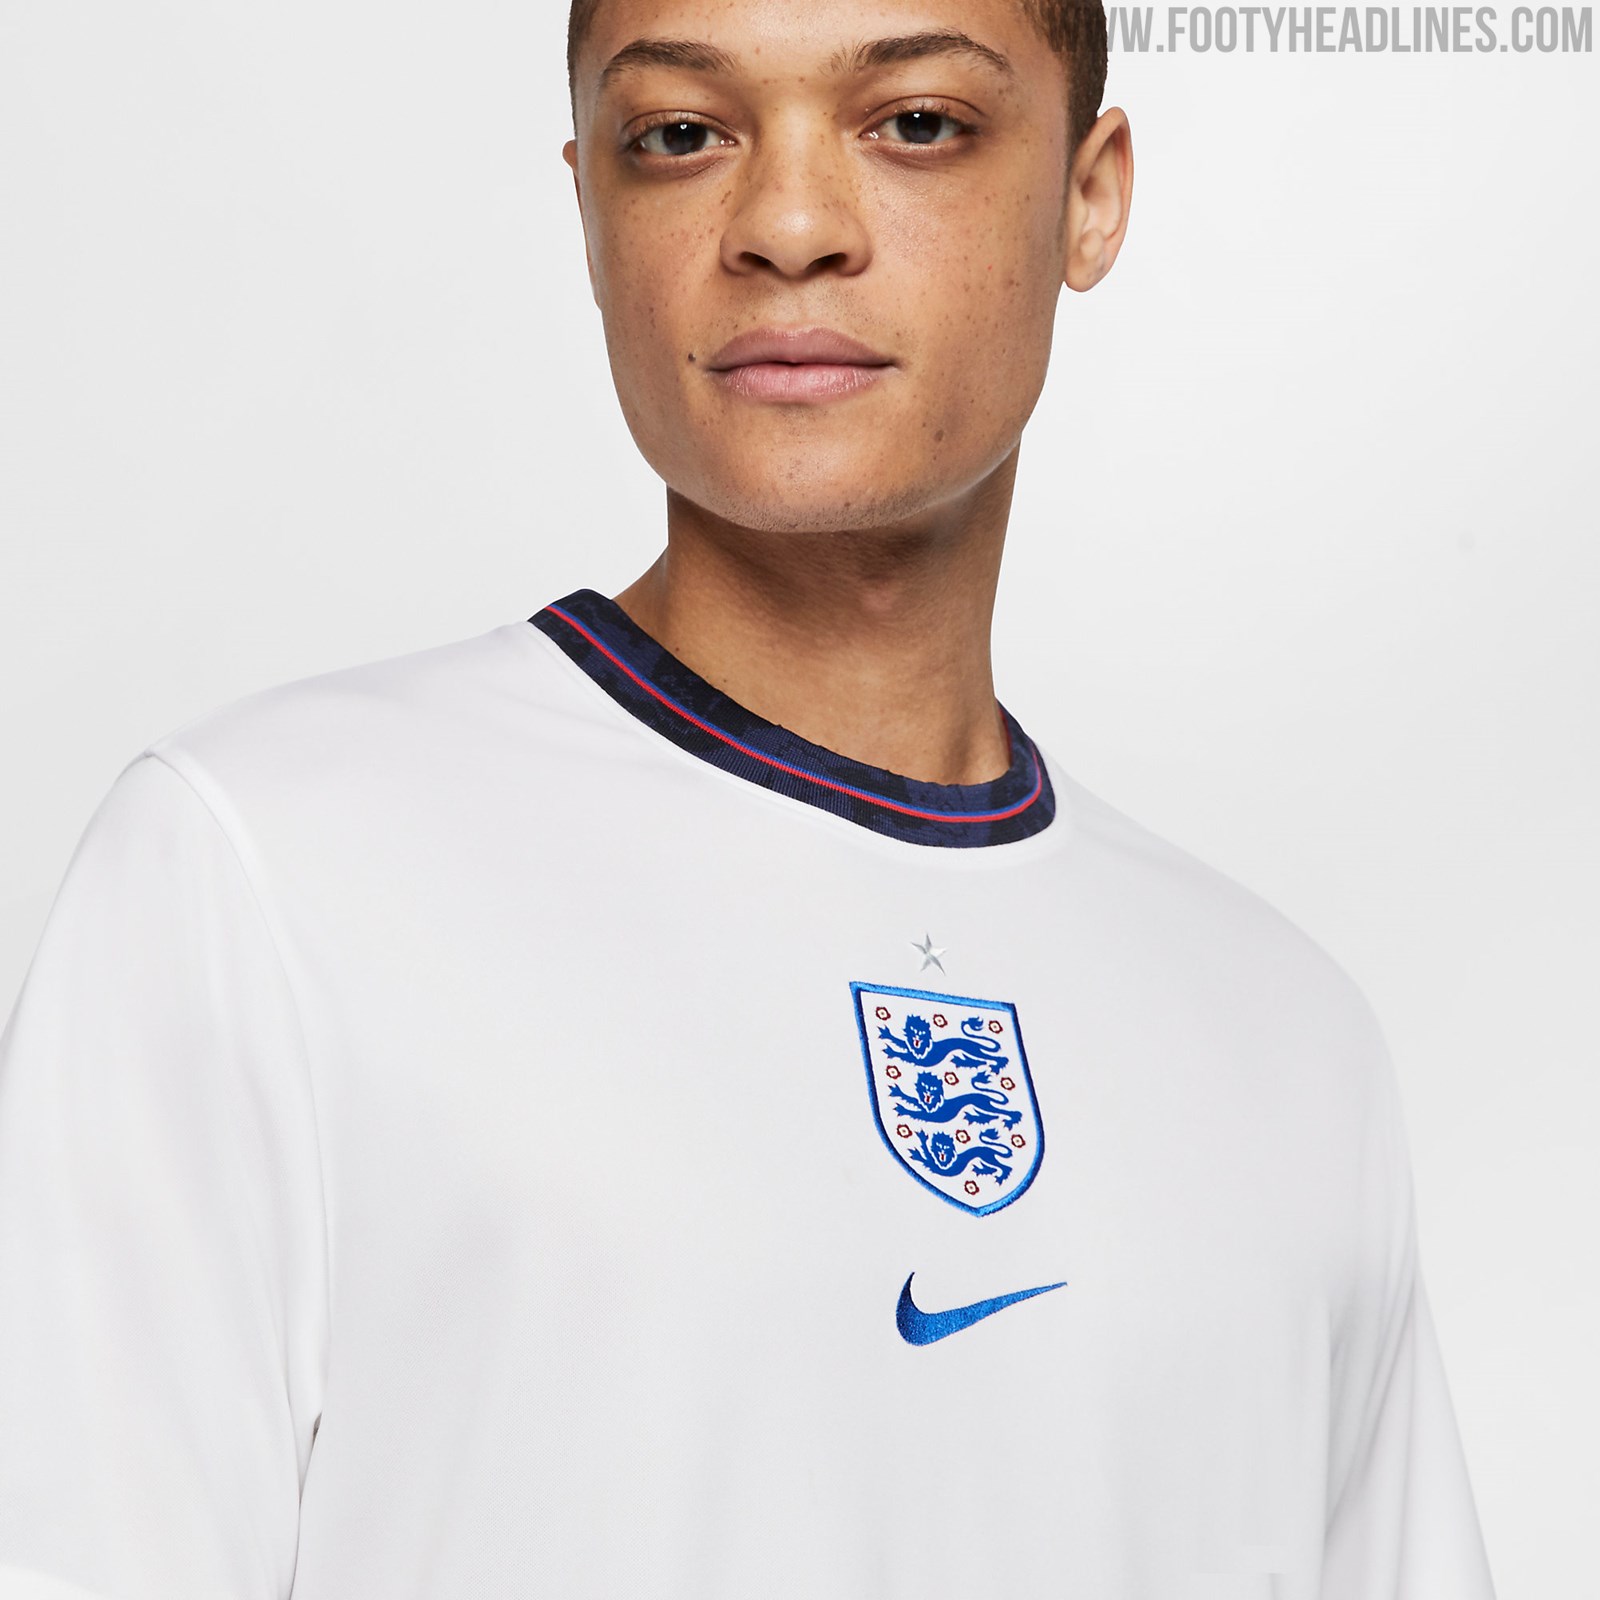 Nike England Euro 2020 Home Kit Released - Footy Headlines